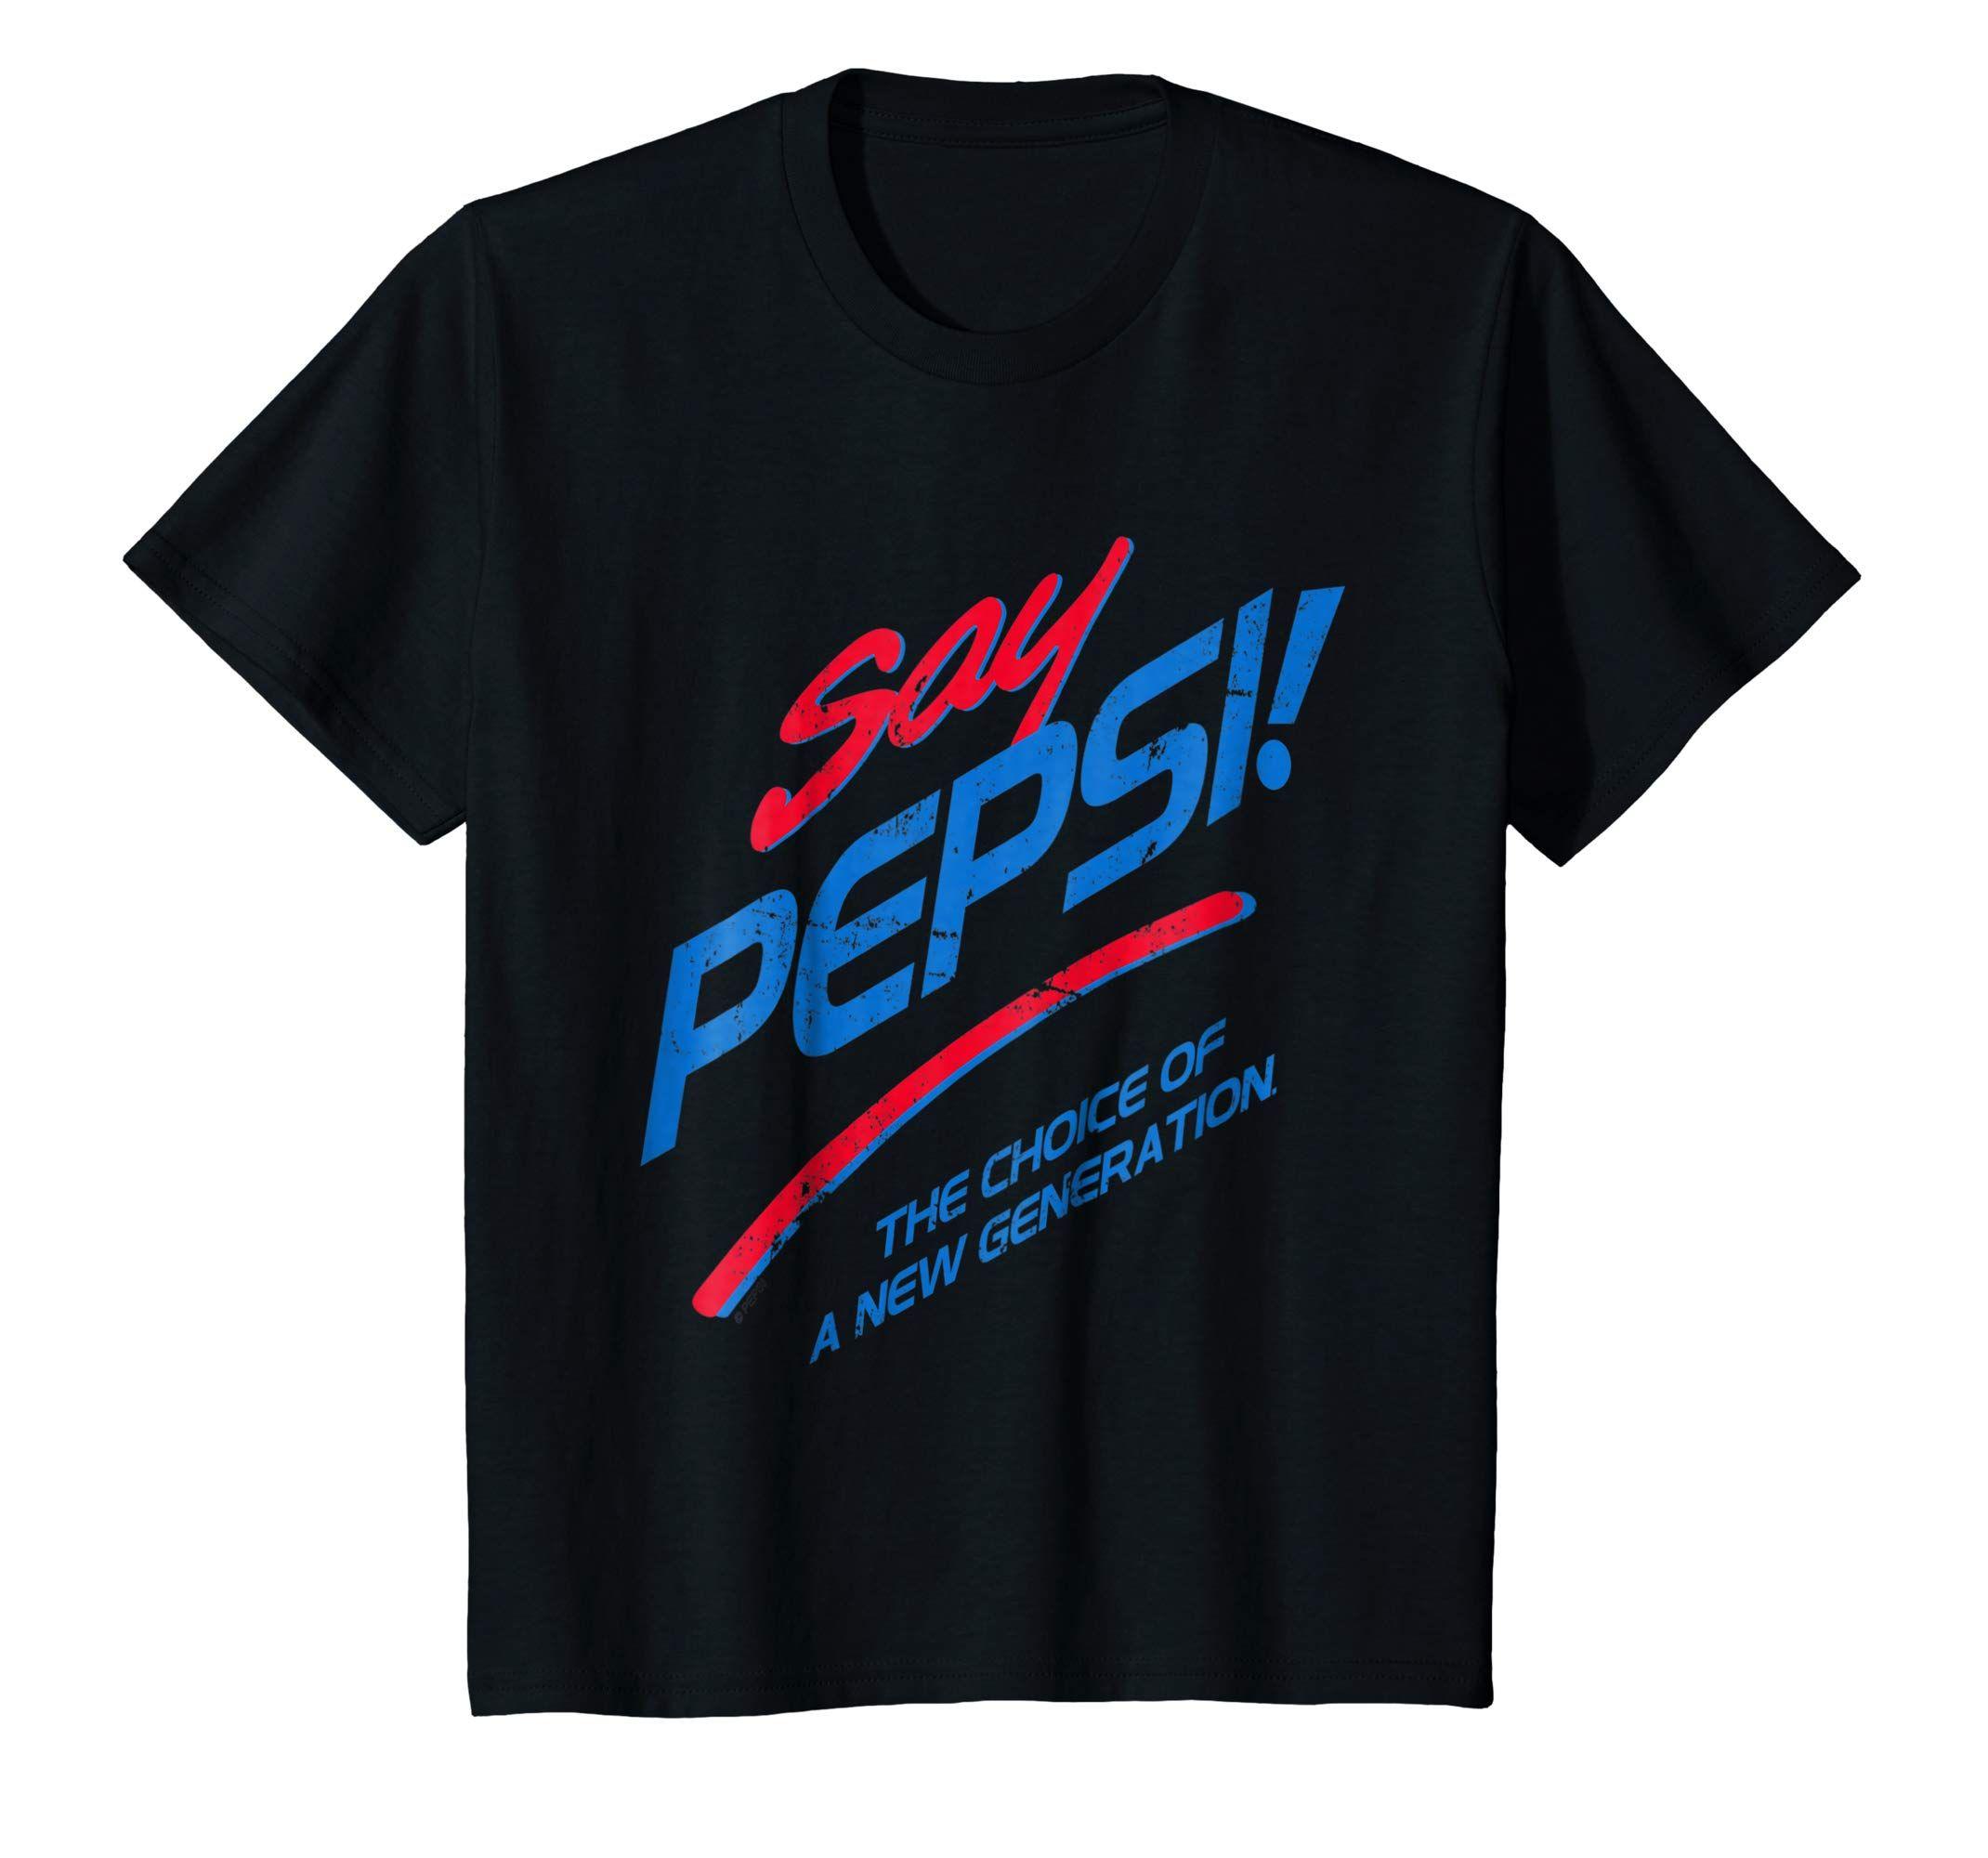 Vintage Diet Pepsi Logo - Amazon.com: Pepsi Cola Vintage Brands Soft Drinks T Shirt: Clothing